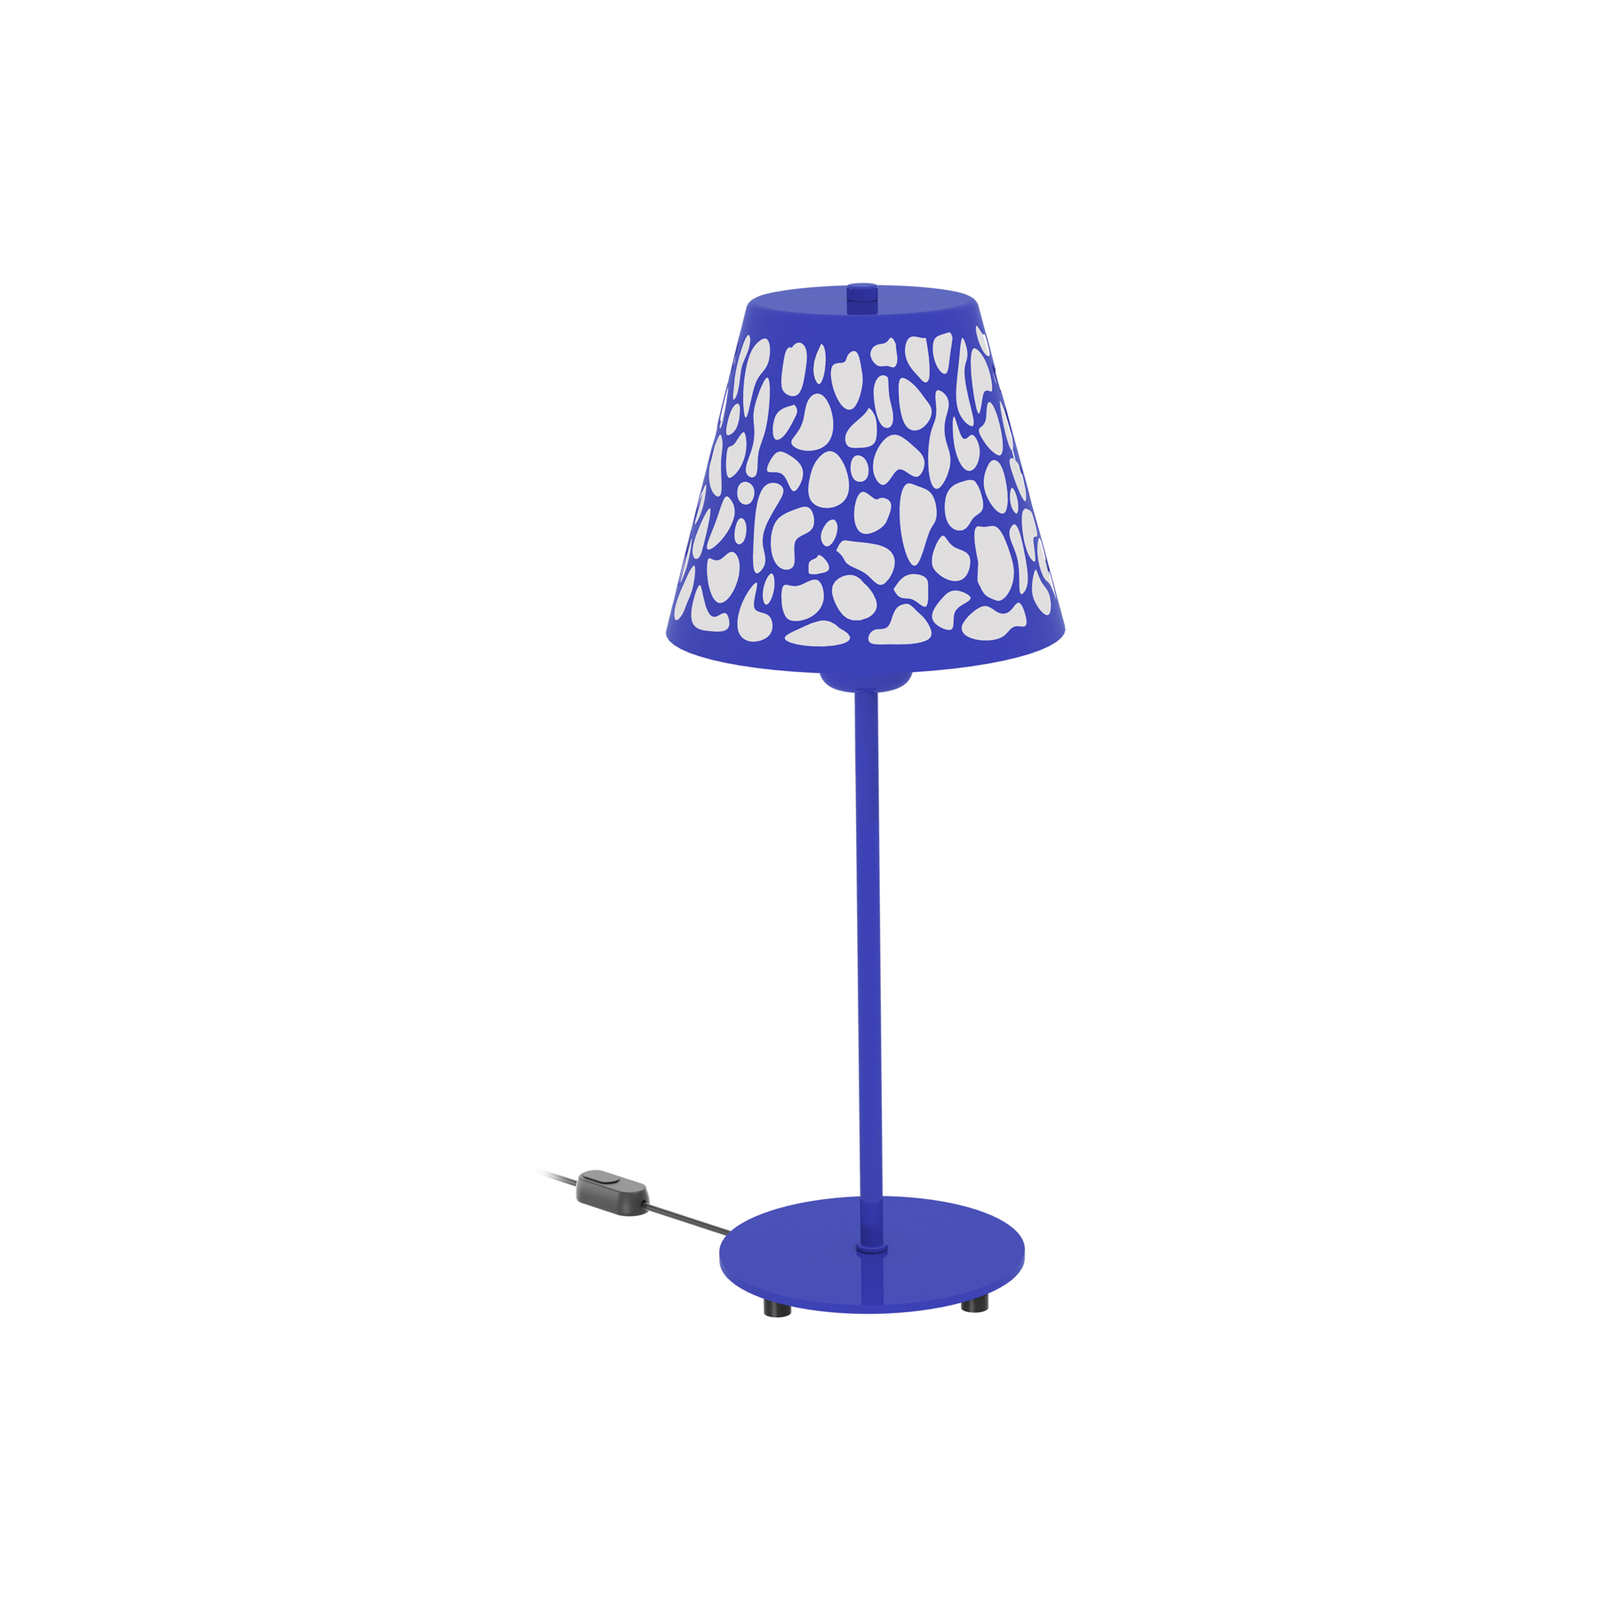 Aluminor Nihoa lampa perforovaný vzor modrá/biela